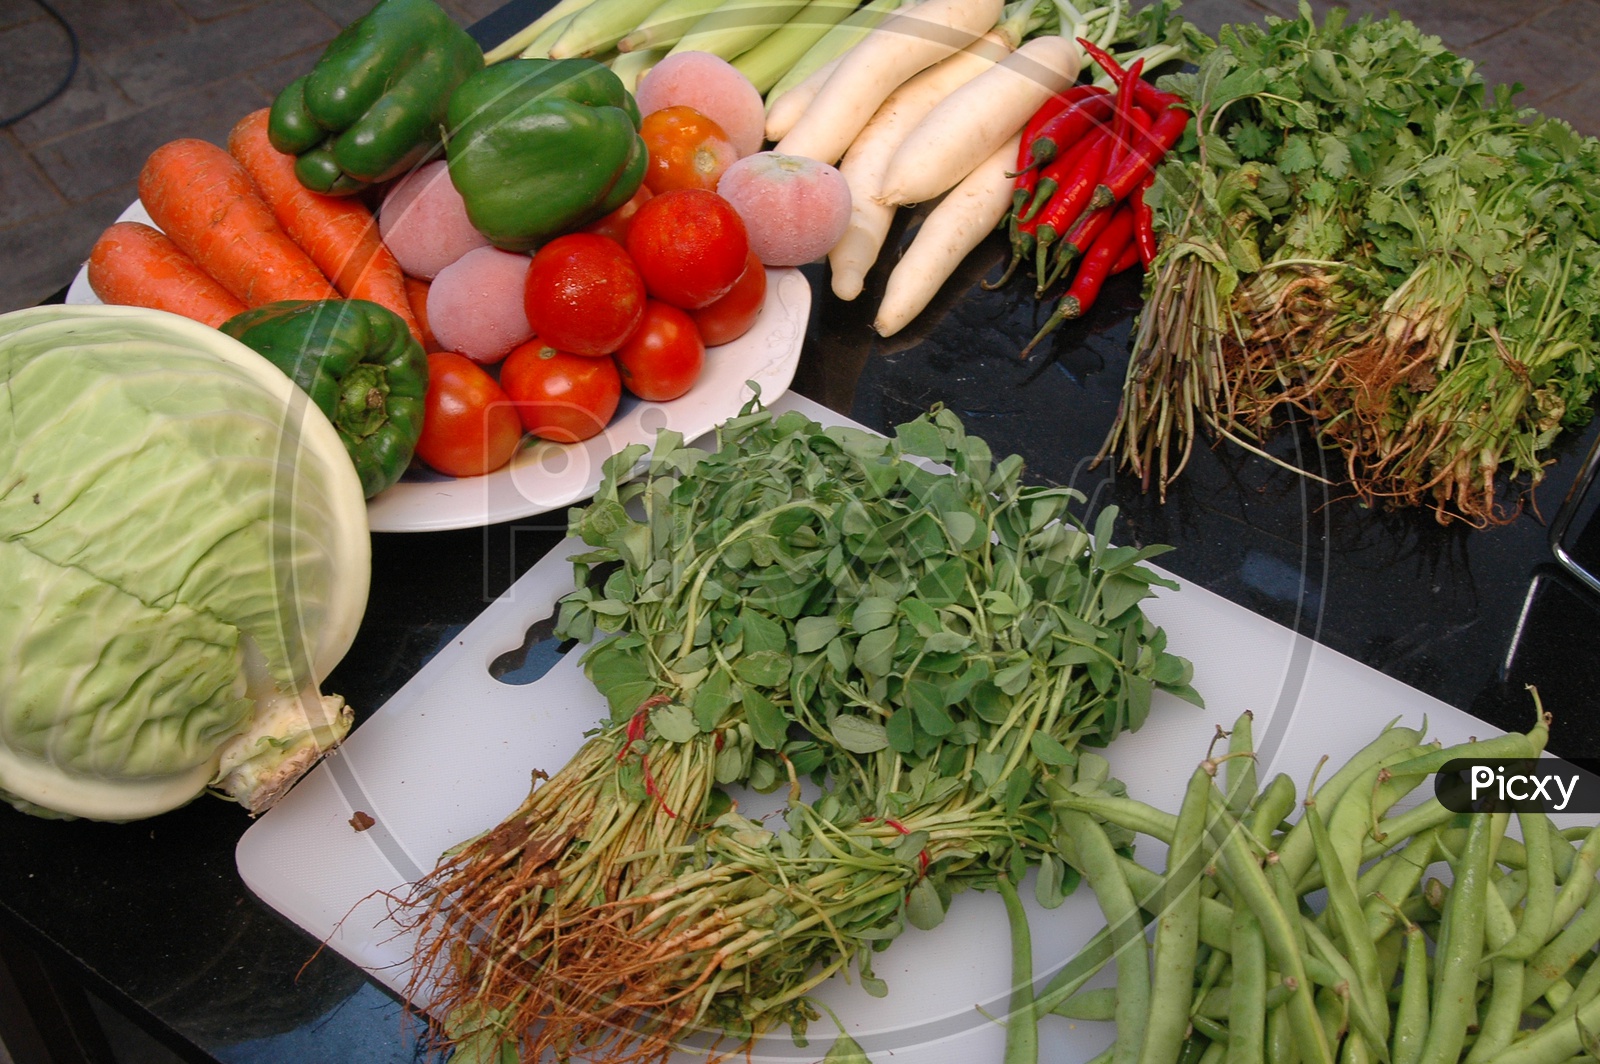 Photograph of fresh vegetables